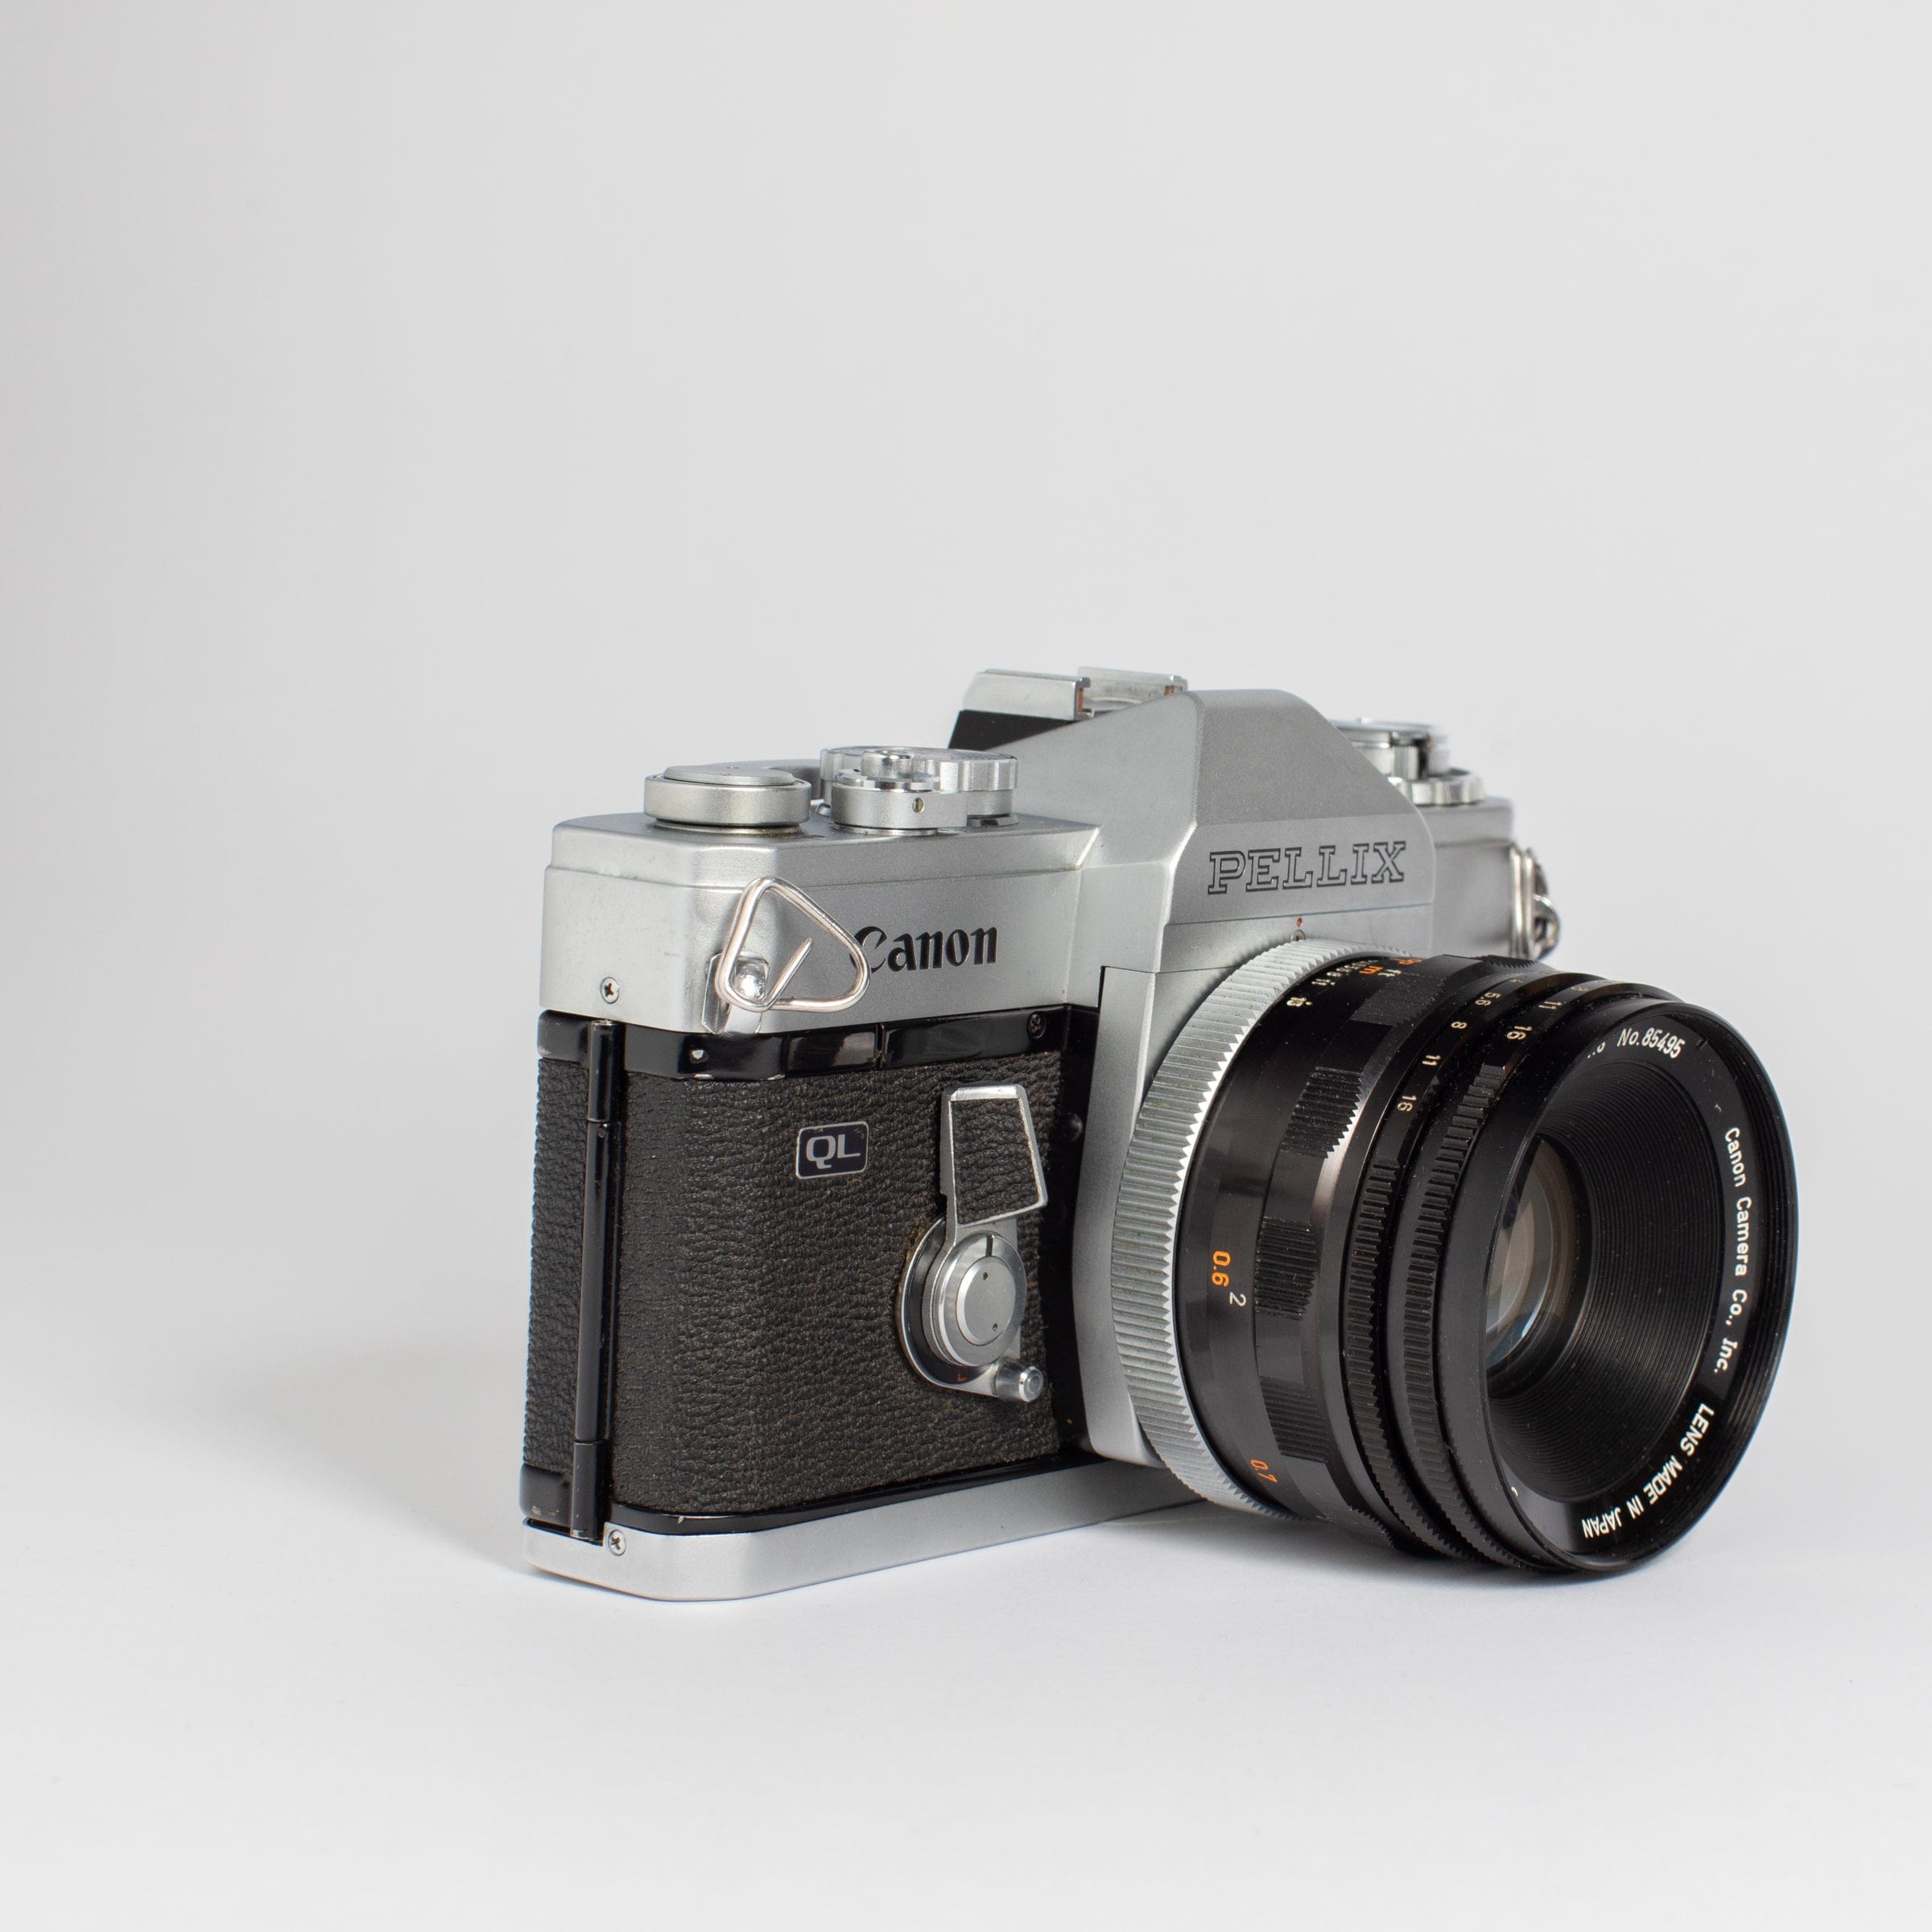 Canon Pellix QL w/ 50mm 1.8 Super-Chromatic R – Film Supply Club